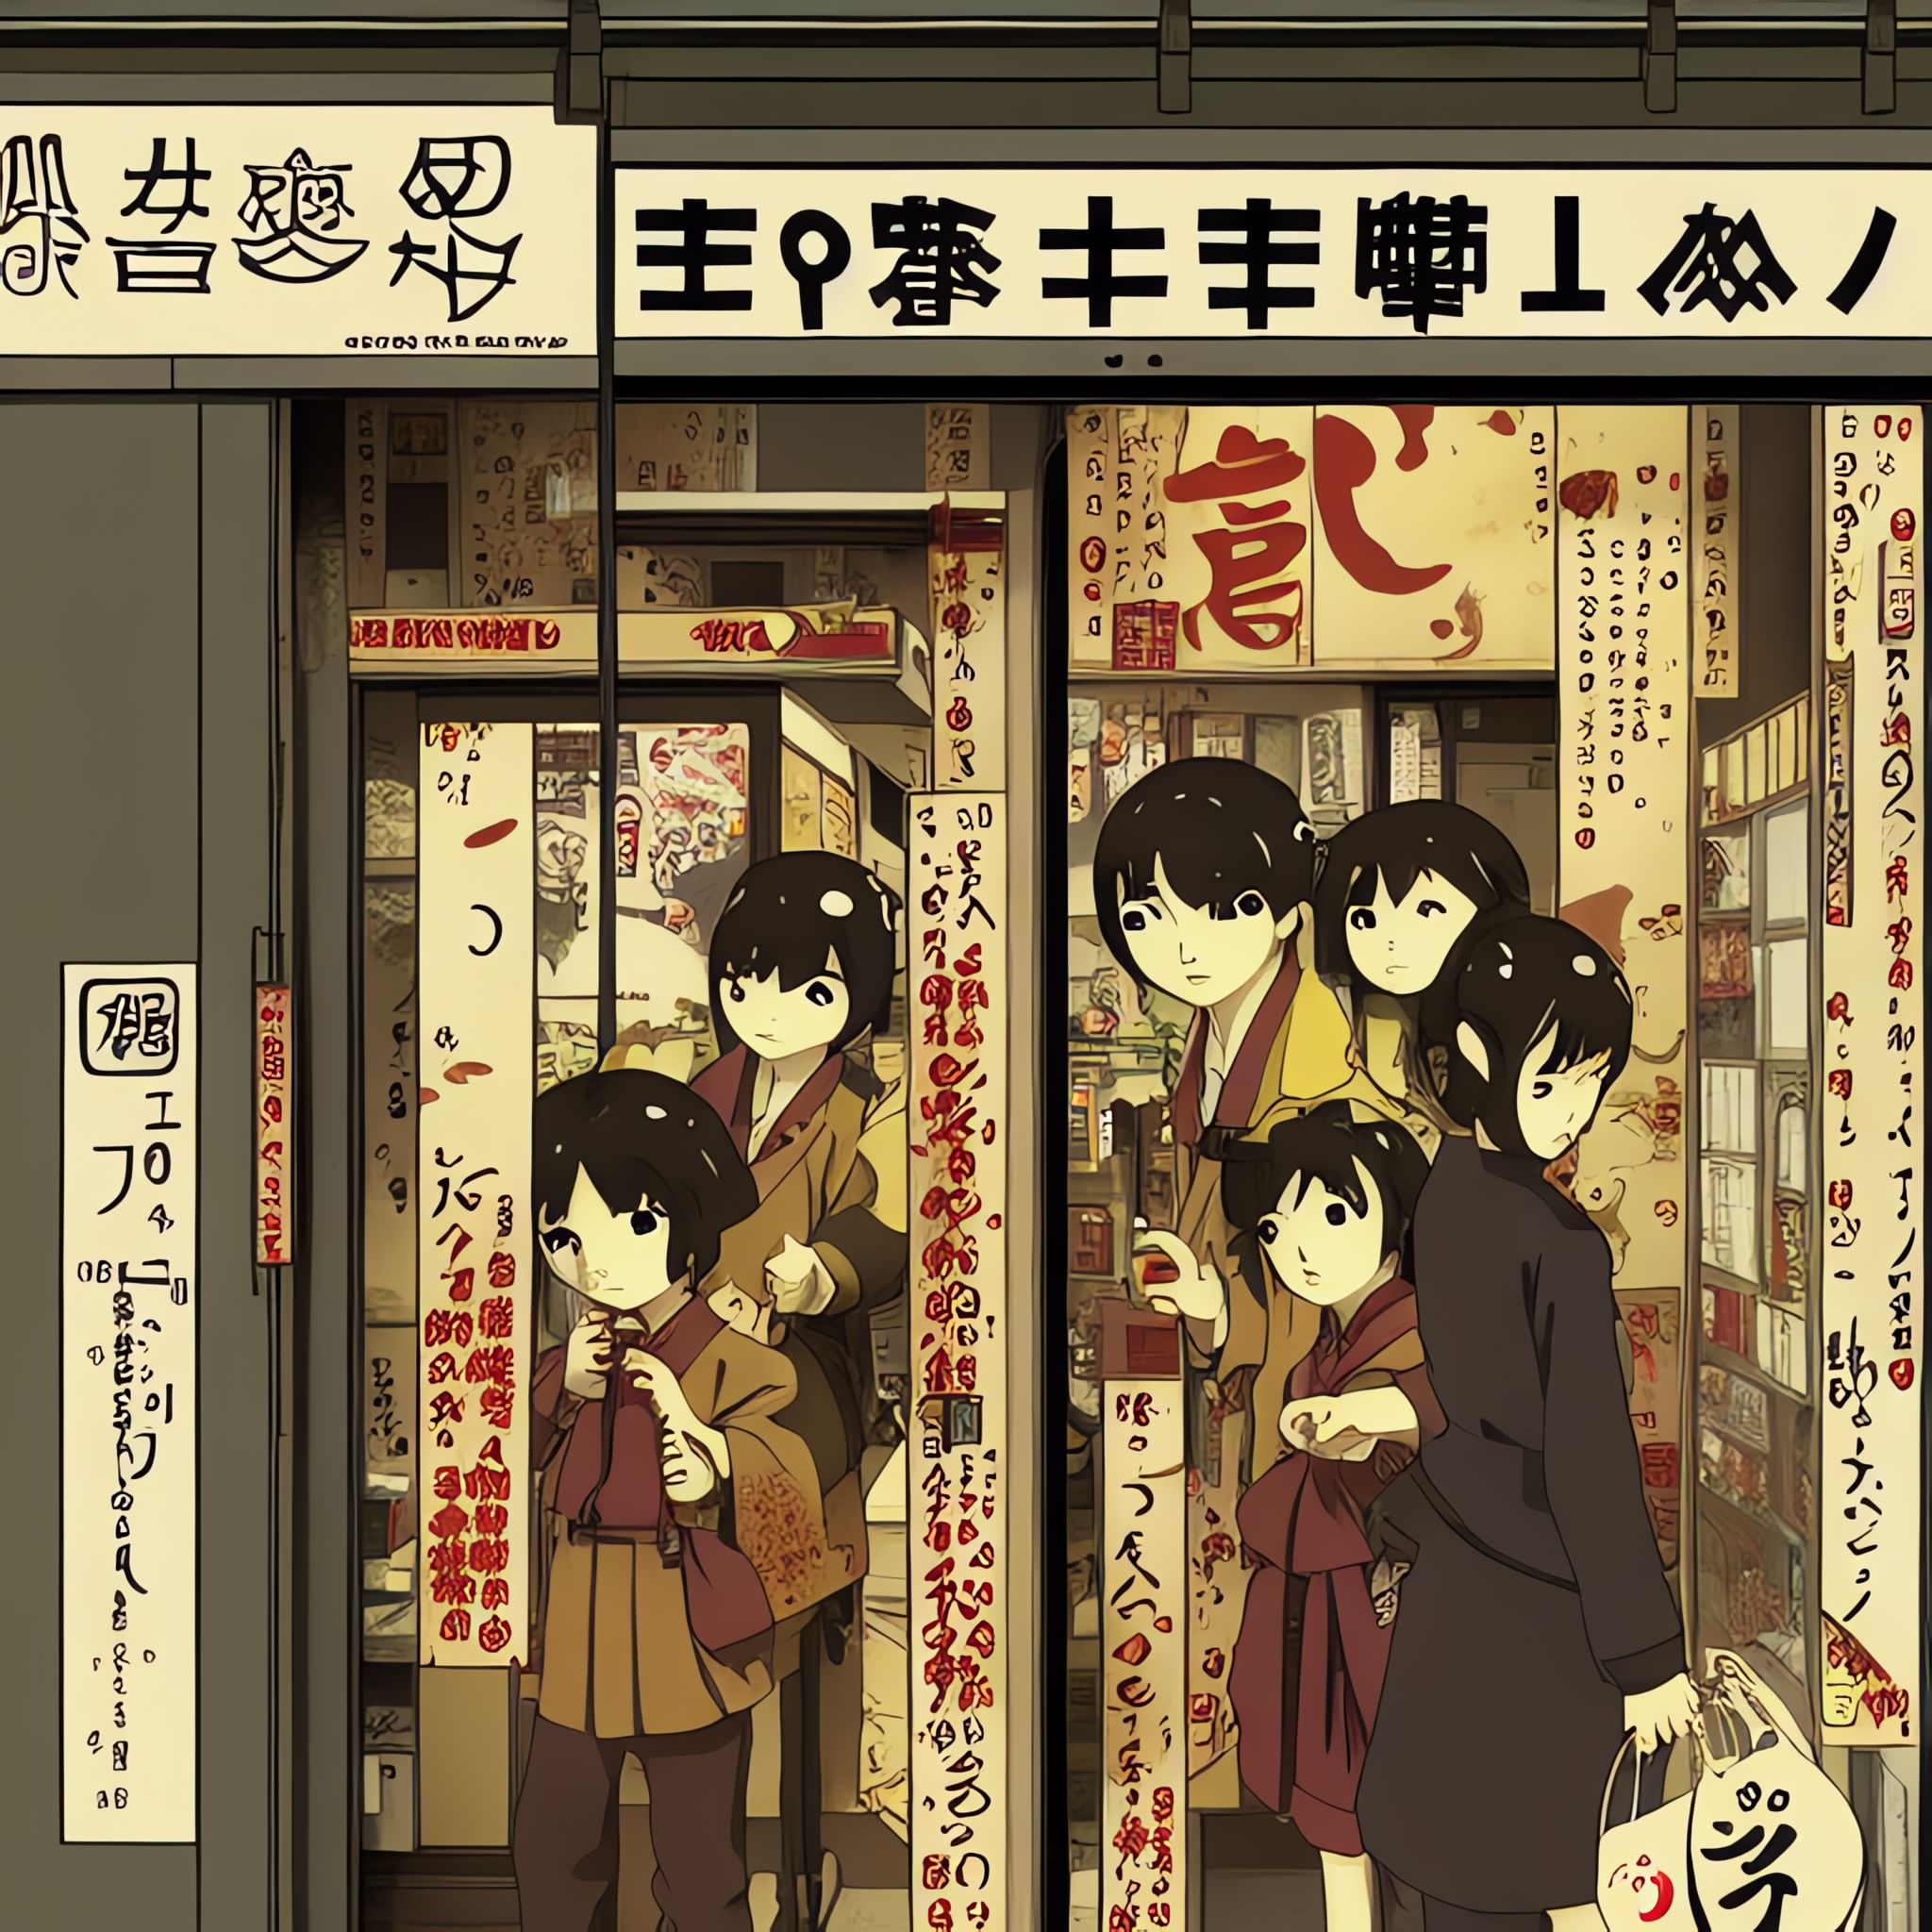 Door-of-a-Japanese-convenience-store-wide-shot-Satoshi-Kon-Anime-Dark-Steampunk-y840